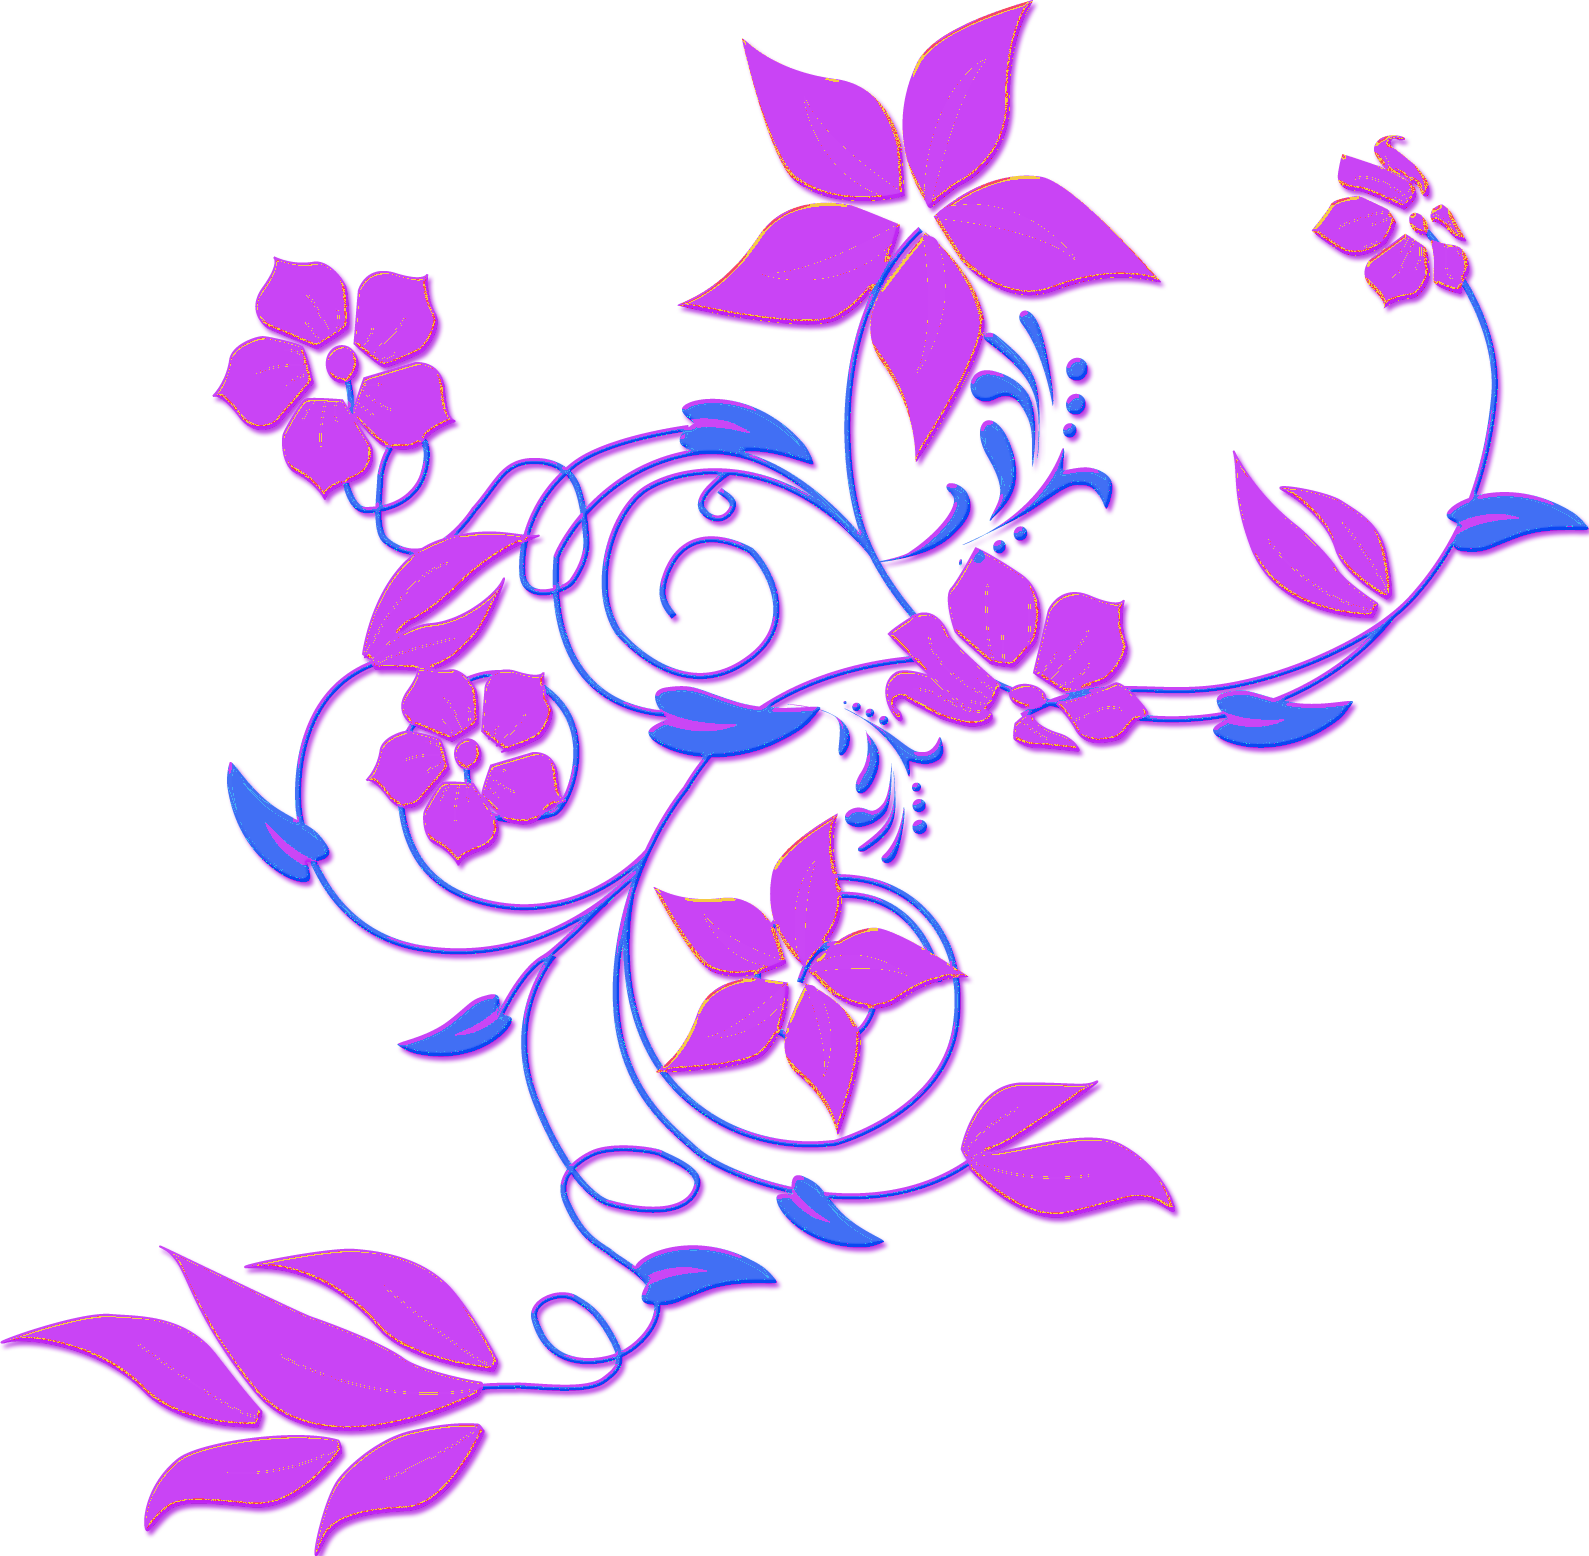 Flower image vector.